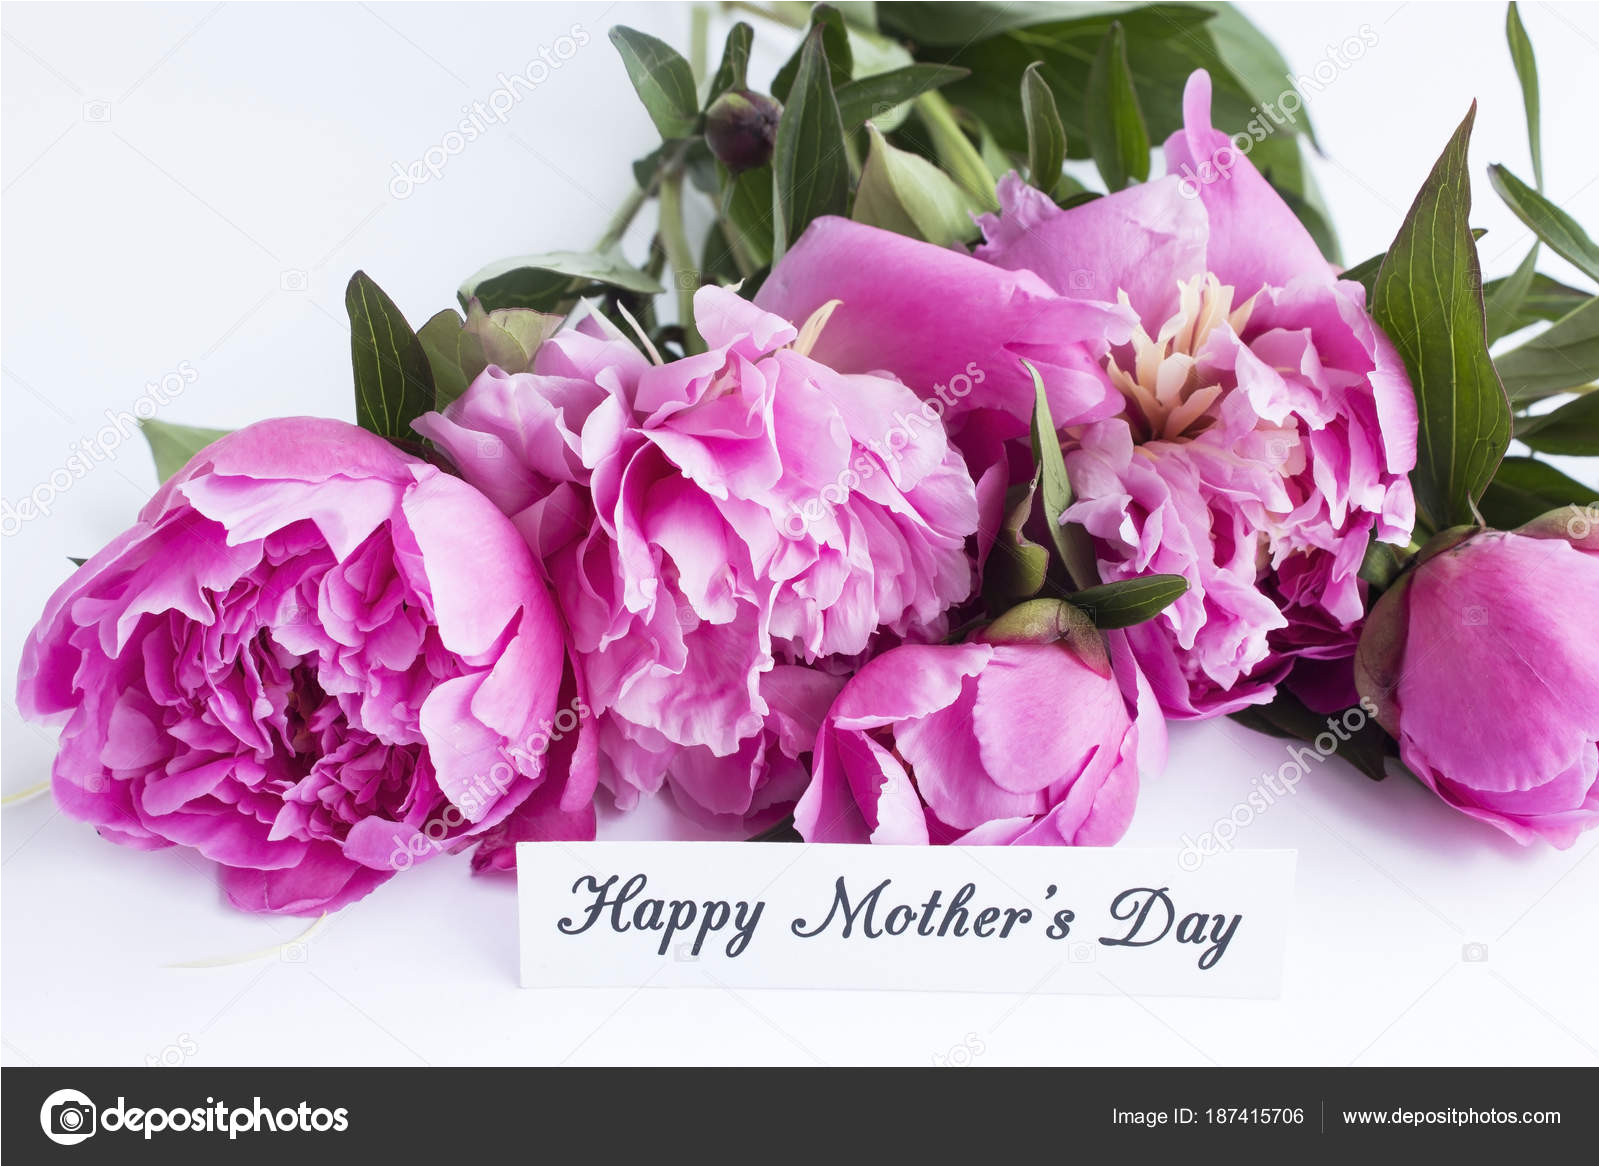 depositphotos 187415706 stock photo happy mothers day greeting card jpg